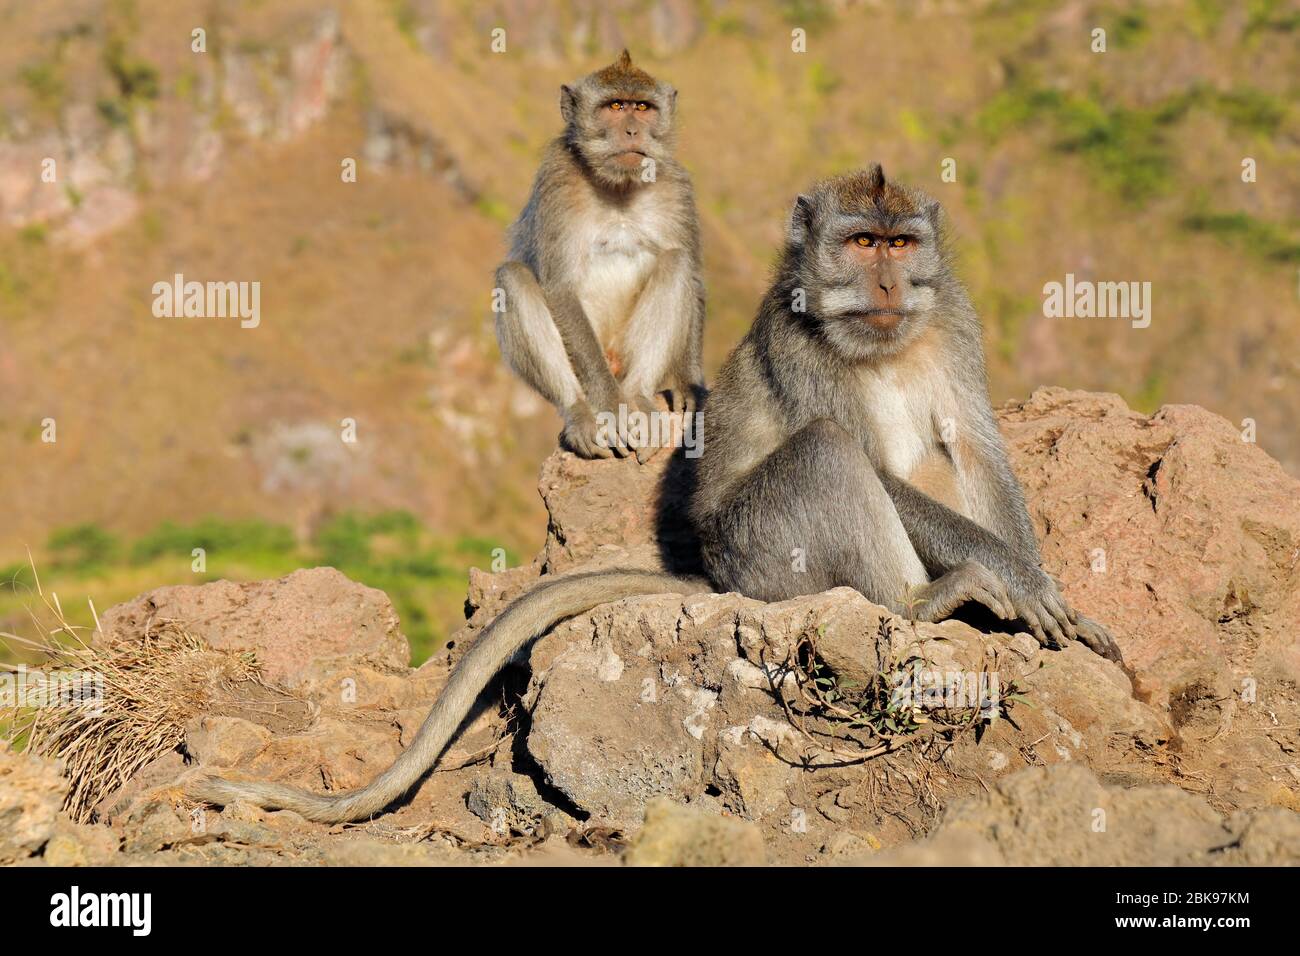 Balinese long-tailed monkeys (Macaca fascicularis) sitting on rocks, Ubud, Bali, Indonesia Stock Photo